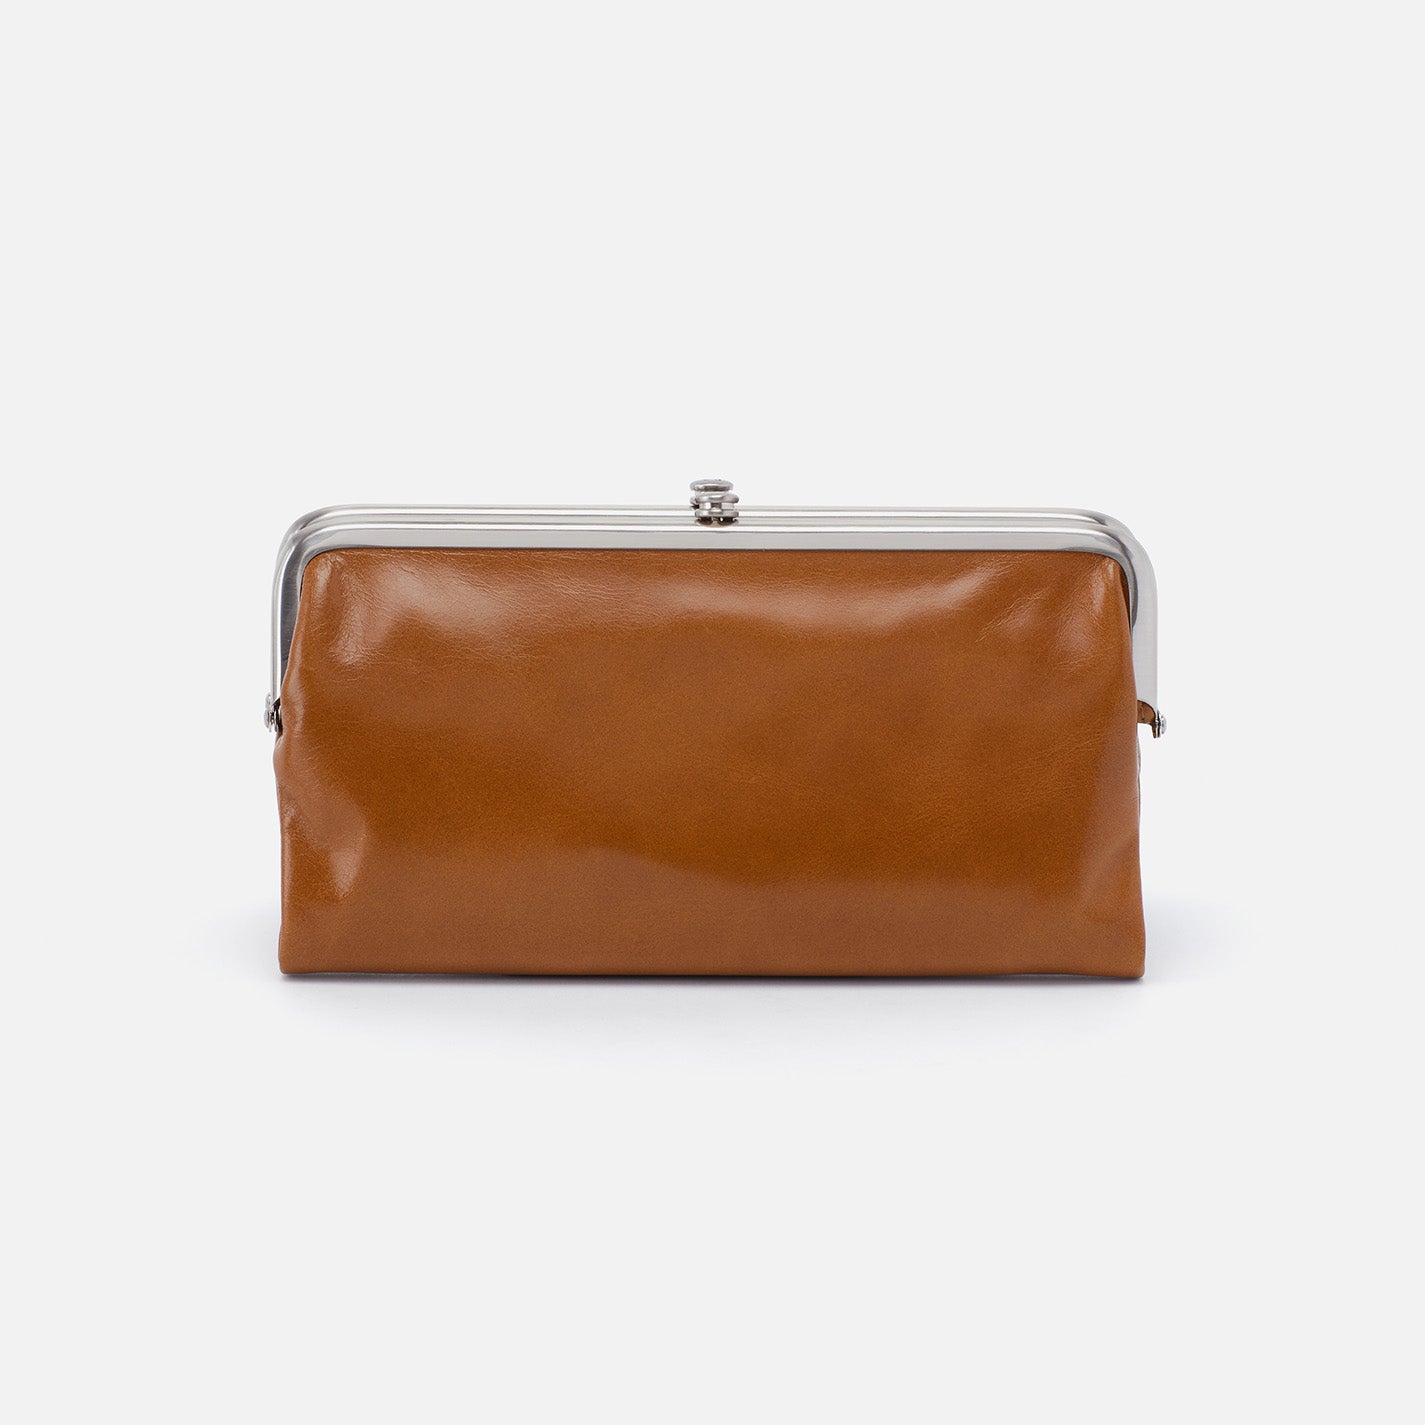 Buy Mia K. Collection Bucket Hobo Crossbody Bag for Women Handbag, Wristlet Wallet  Purse Set Shoulder Strap PU Leather Top Handle Sand at Amazon.in